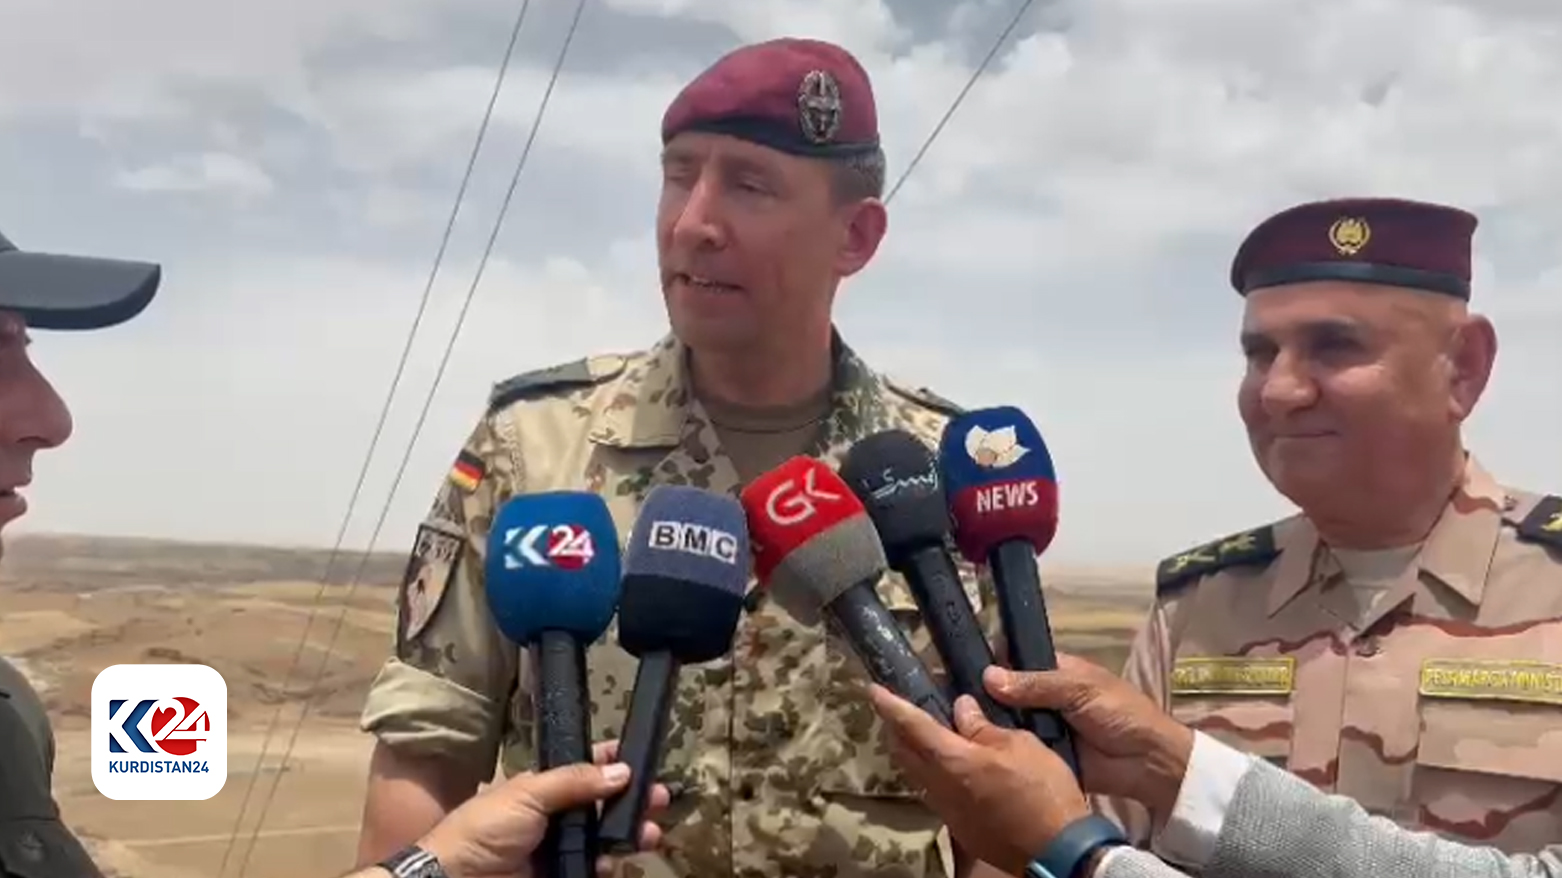 Germany supports Peshmerga reform says German commander